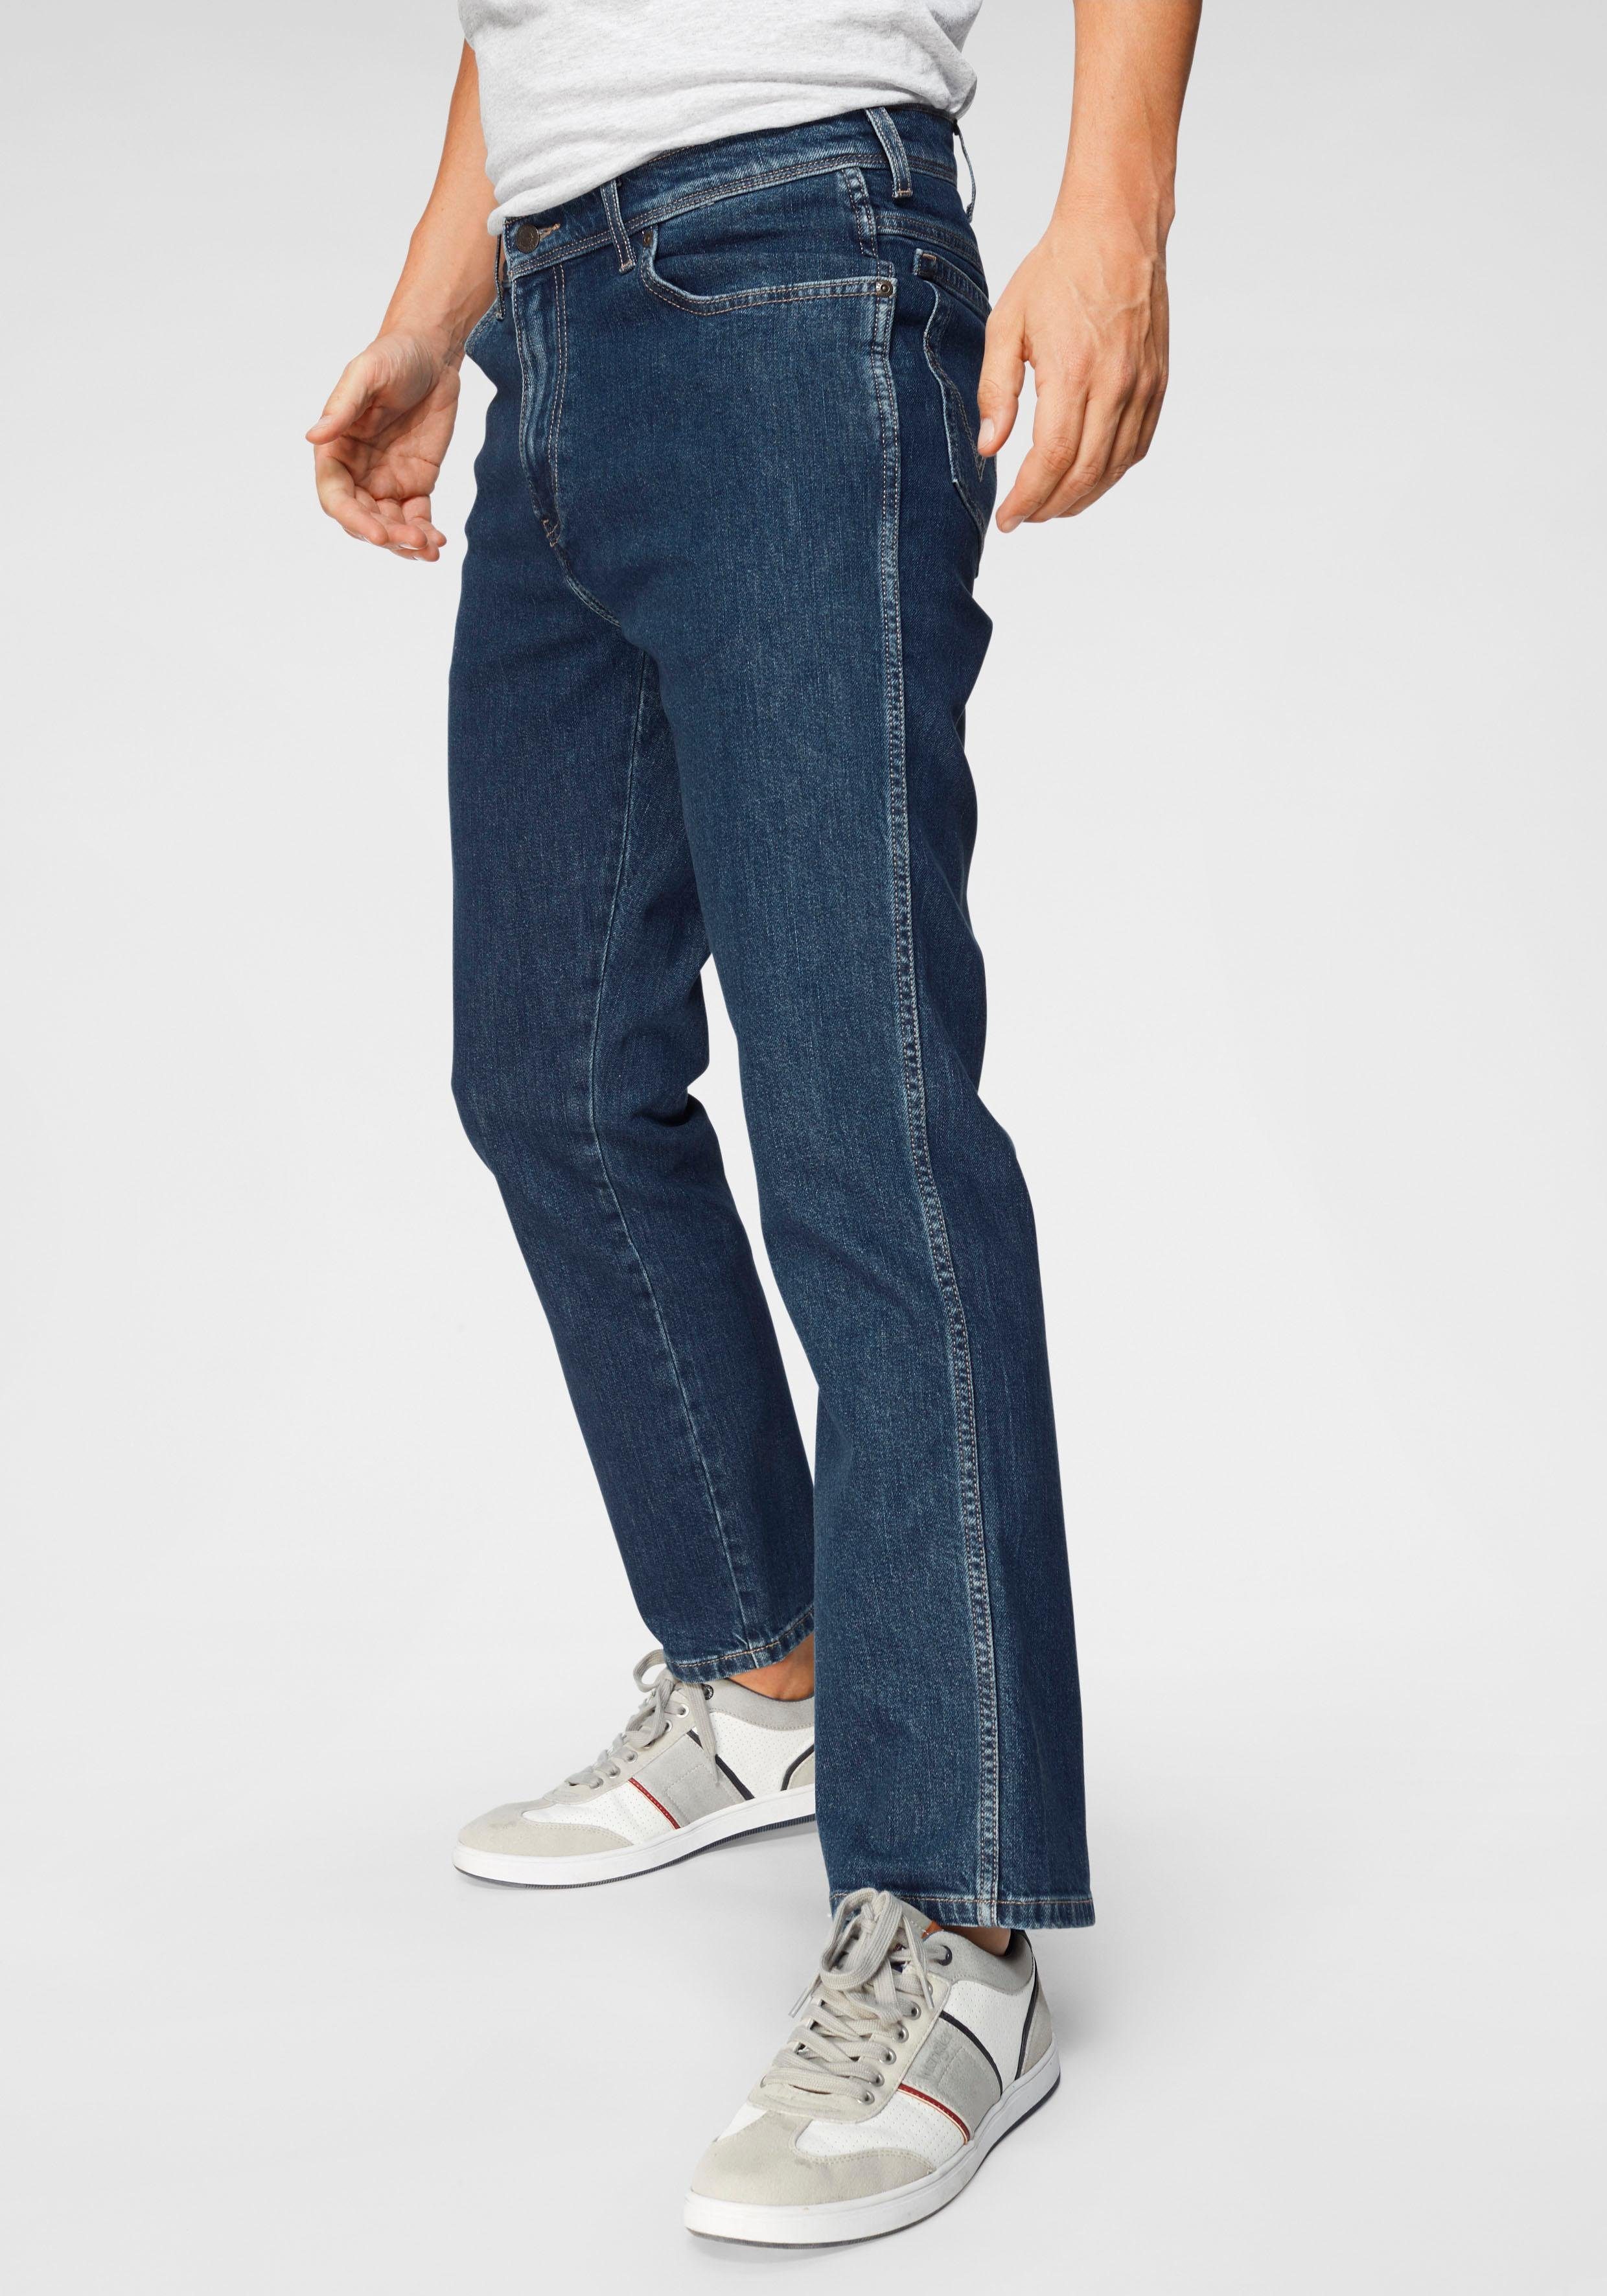 Wrangler Stretch-Jeans Durable online kaufen | OTTO